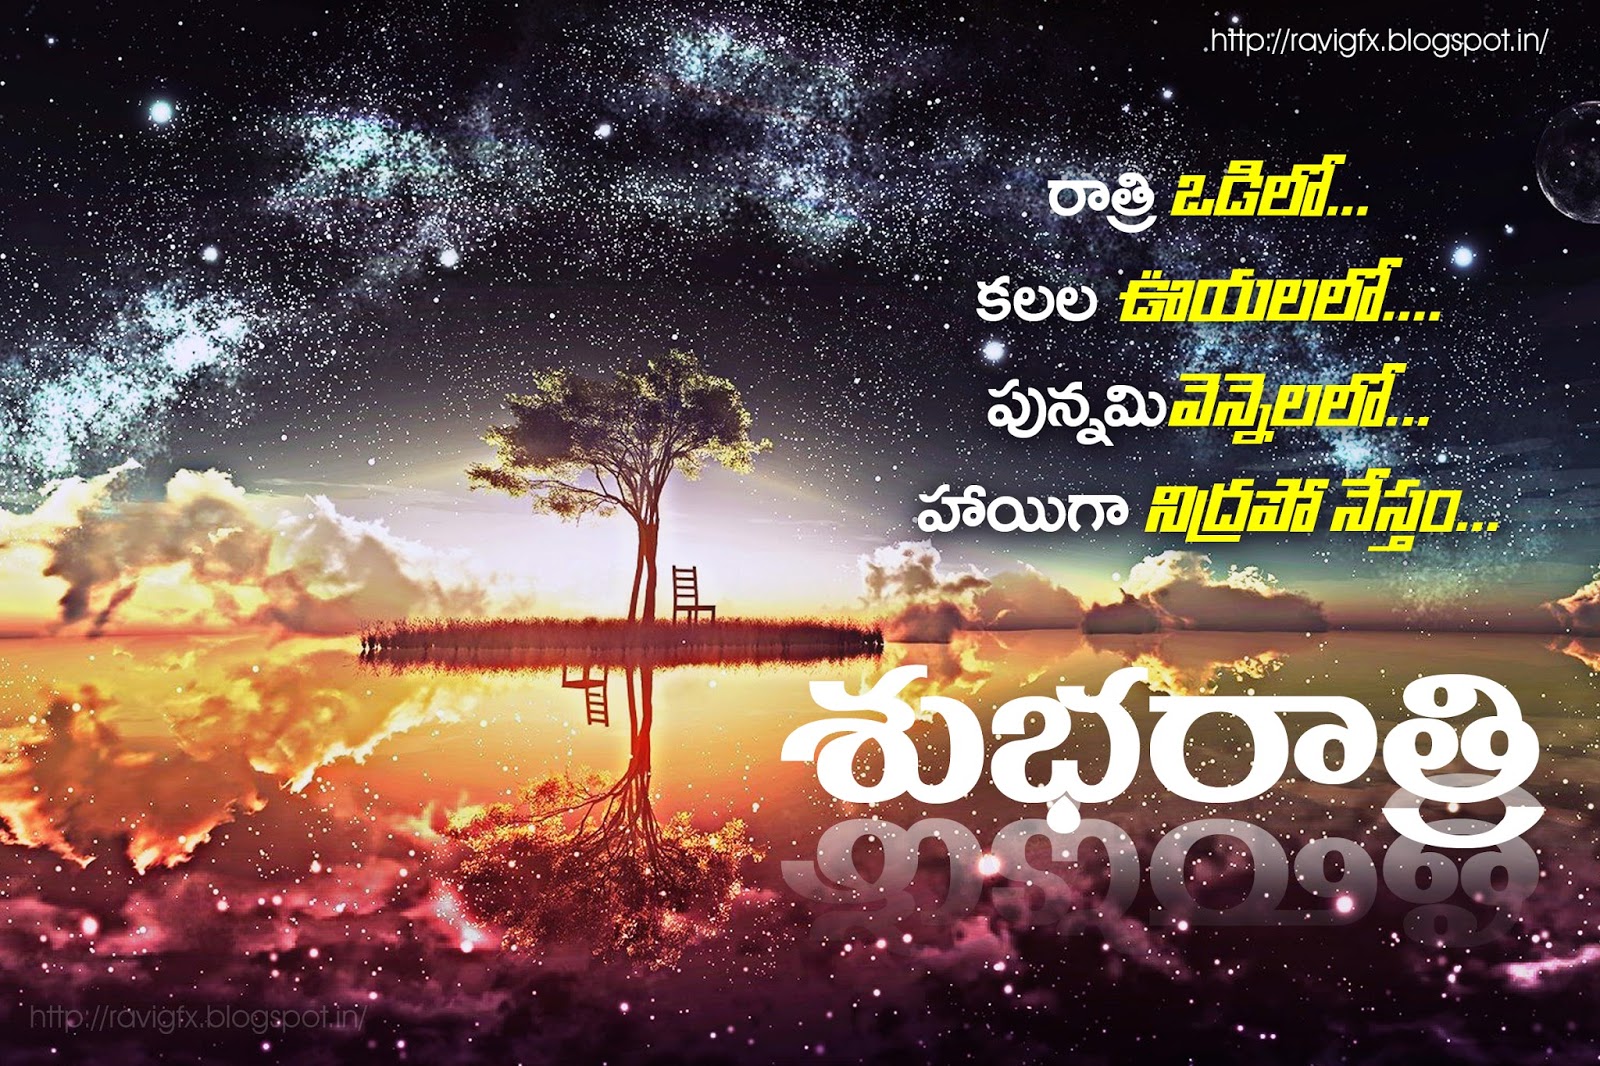 Latest Telugu  good  night quotations  free download  ravigfx